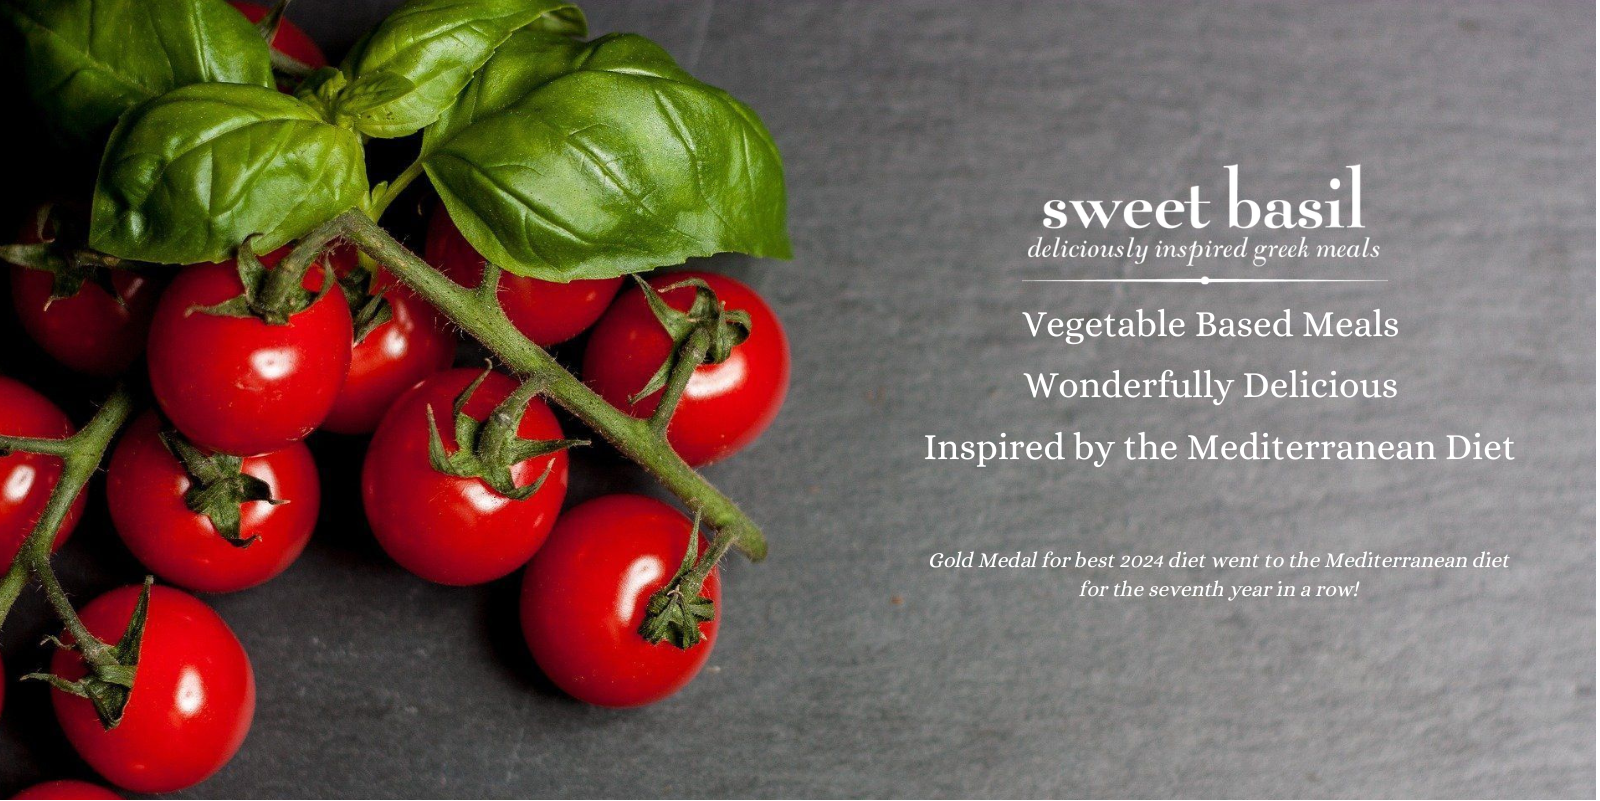 Sweet Basil Vegetable Based Inspired by the Mediterranean Diet